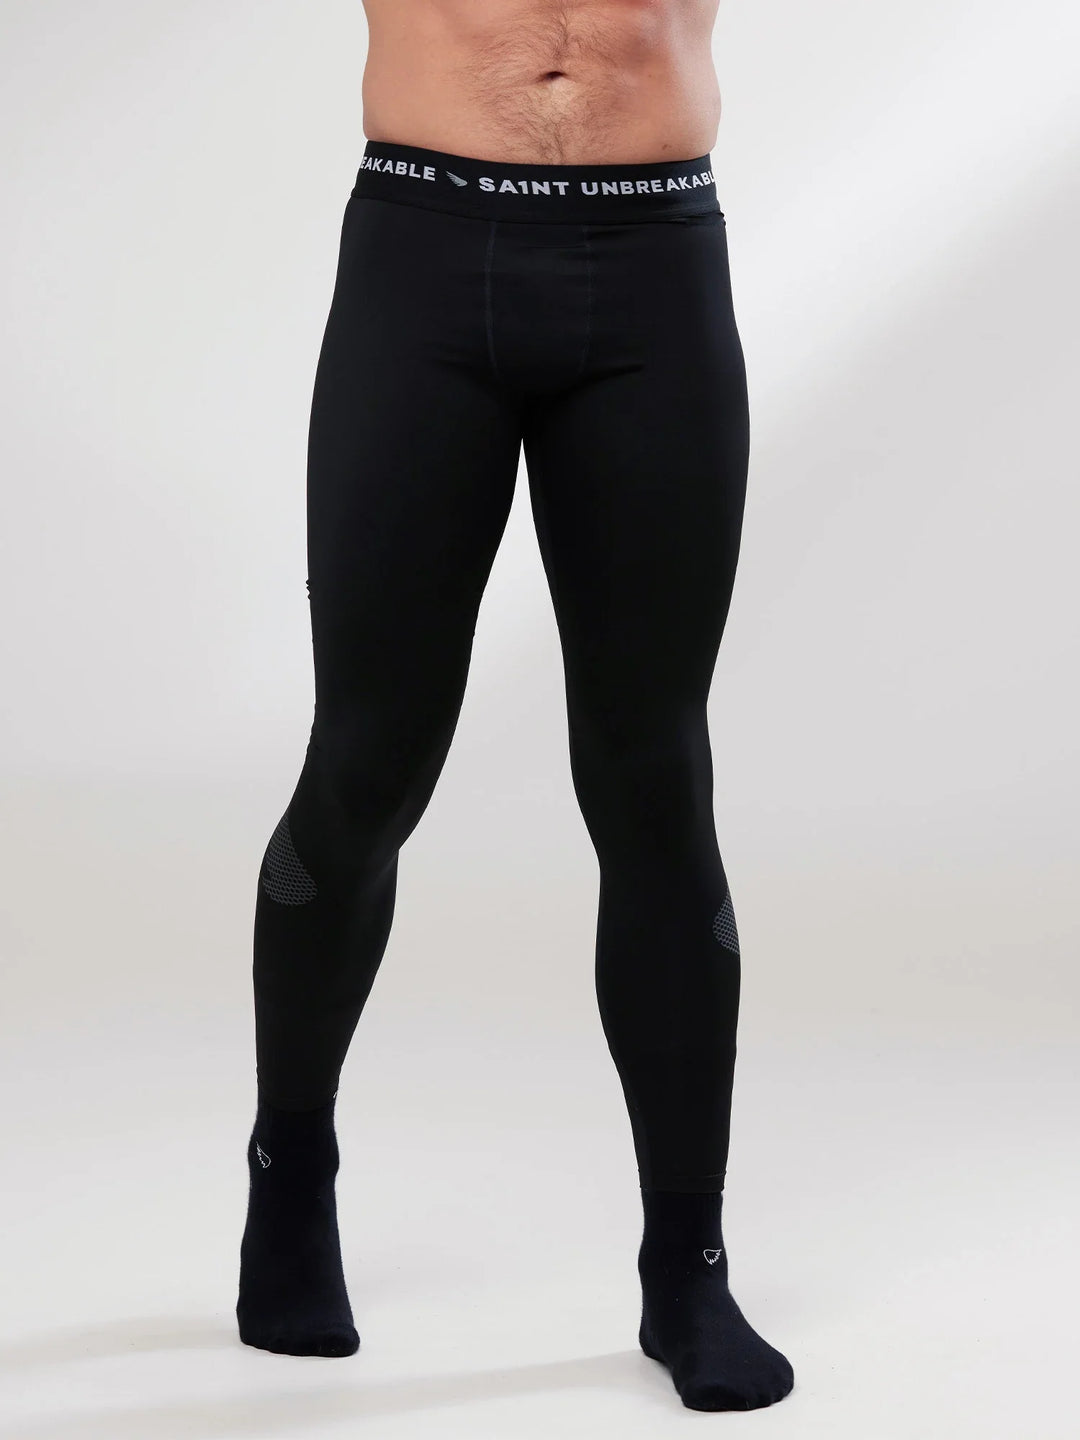 Nicesee Men's Sports Skin Tights Base Pants